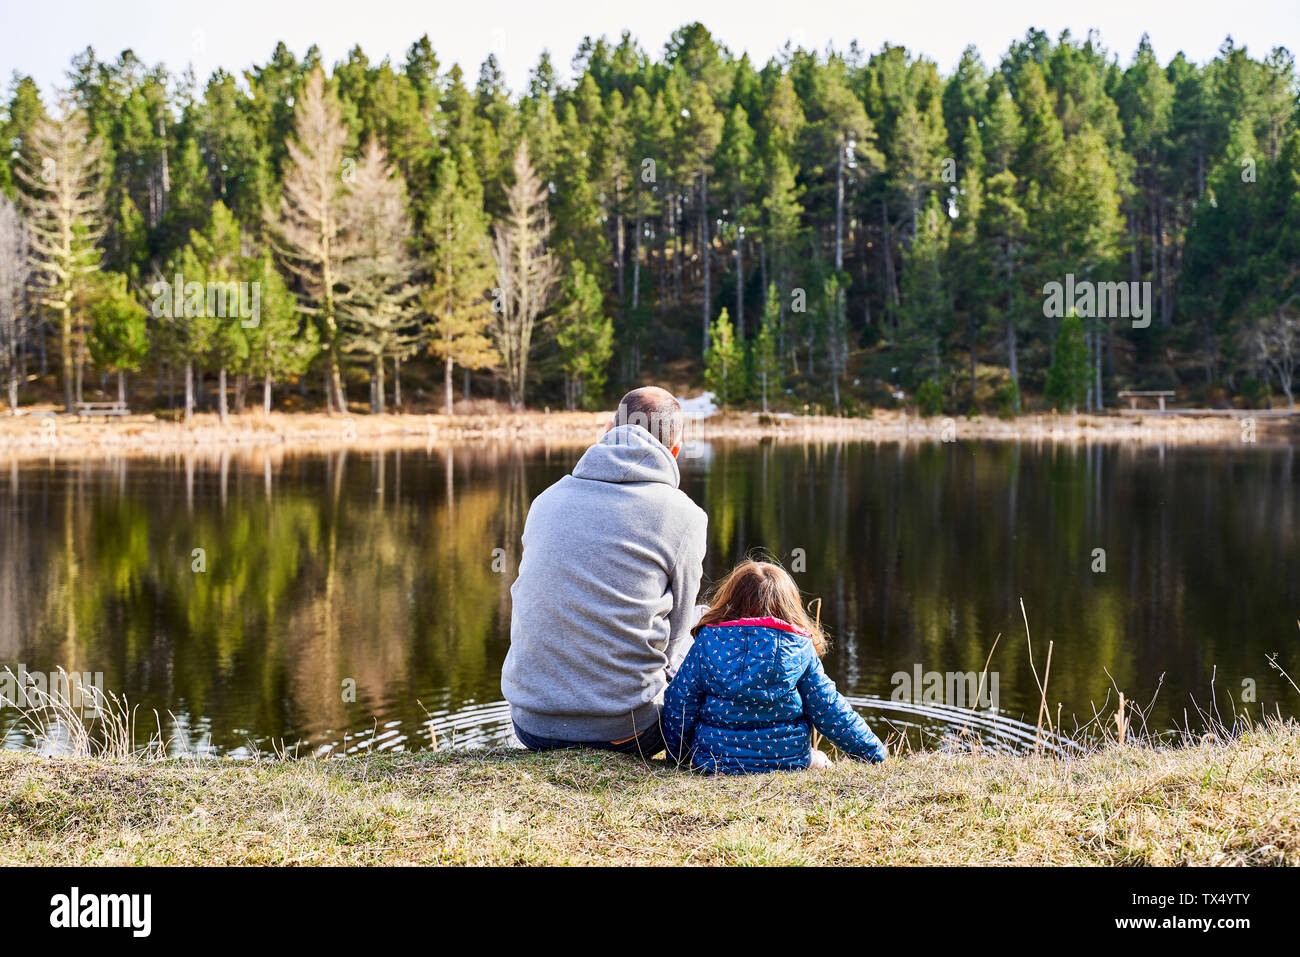 Francia, Pirineos, vista posterior del padre e hija sentada al lado de un lago frontal Foto de stock